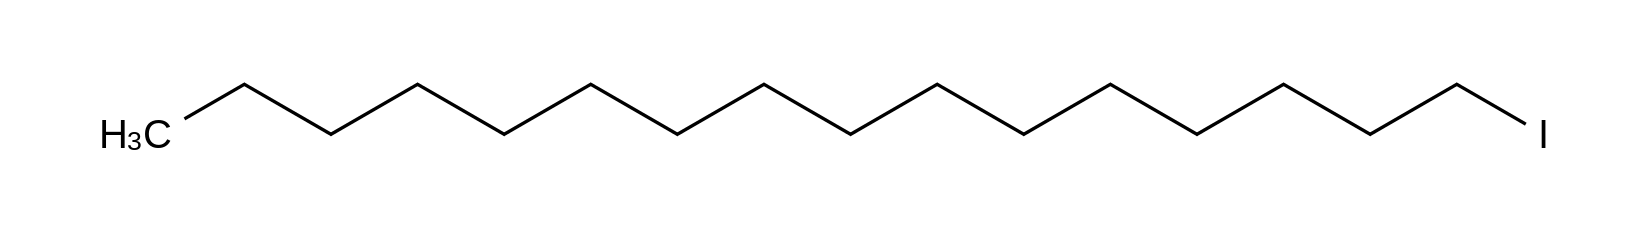 1-Iodo-hexadecane